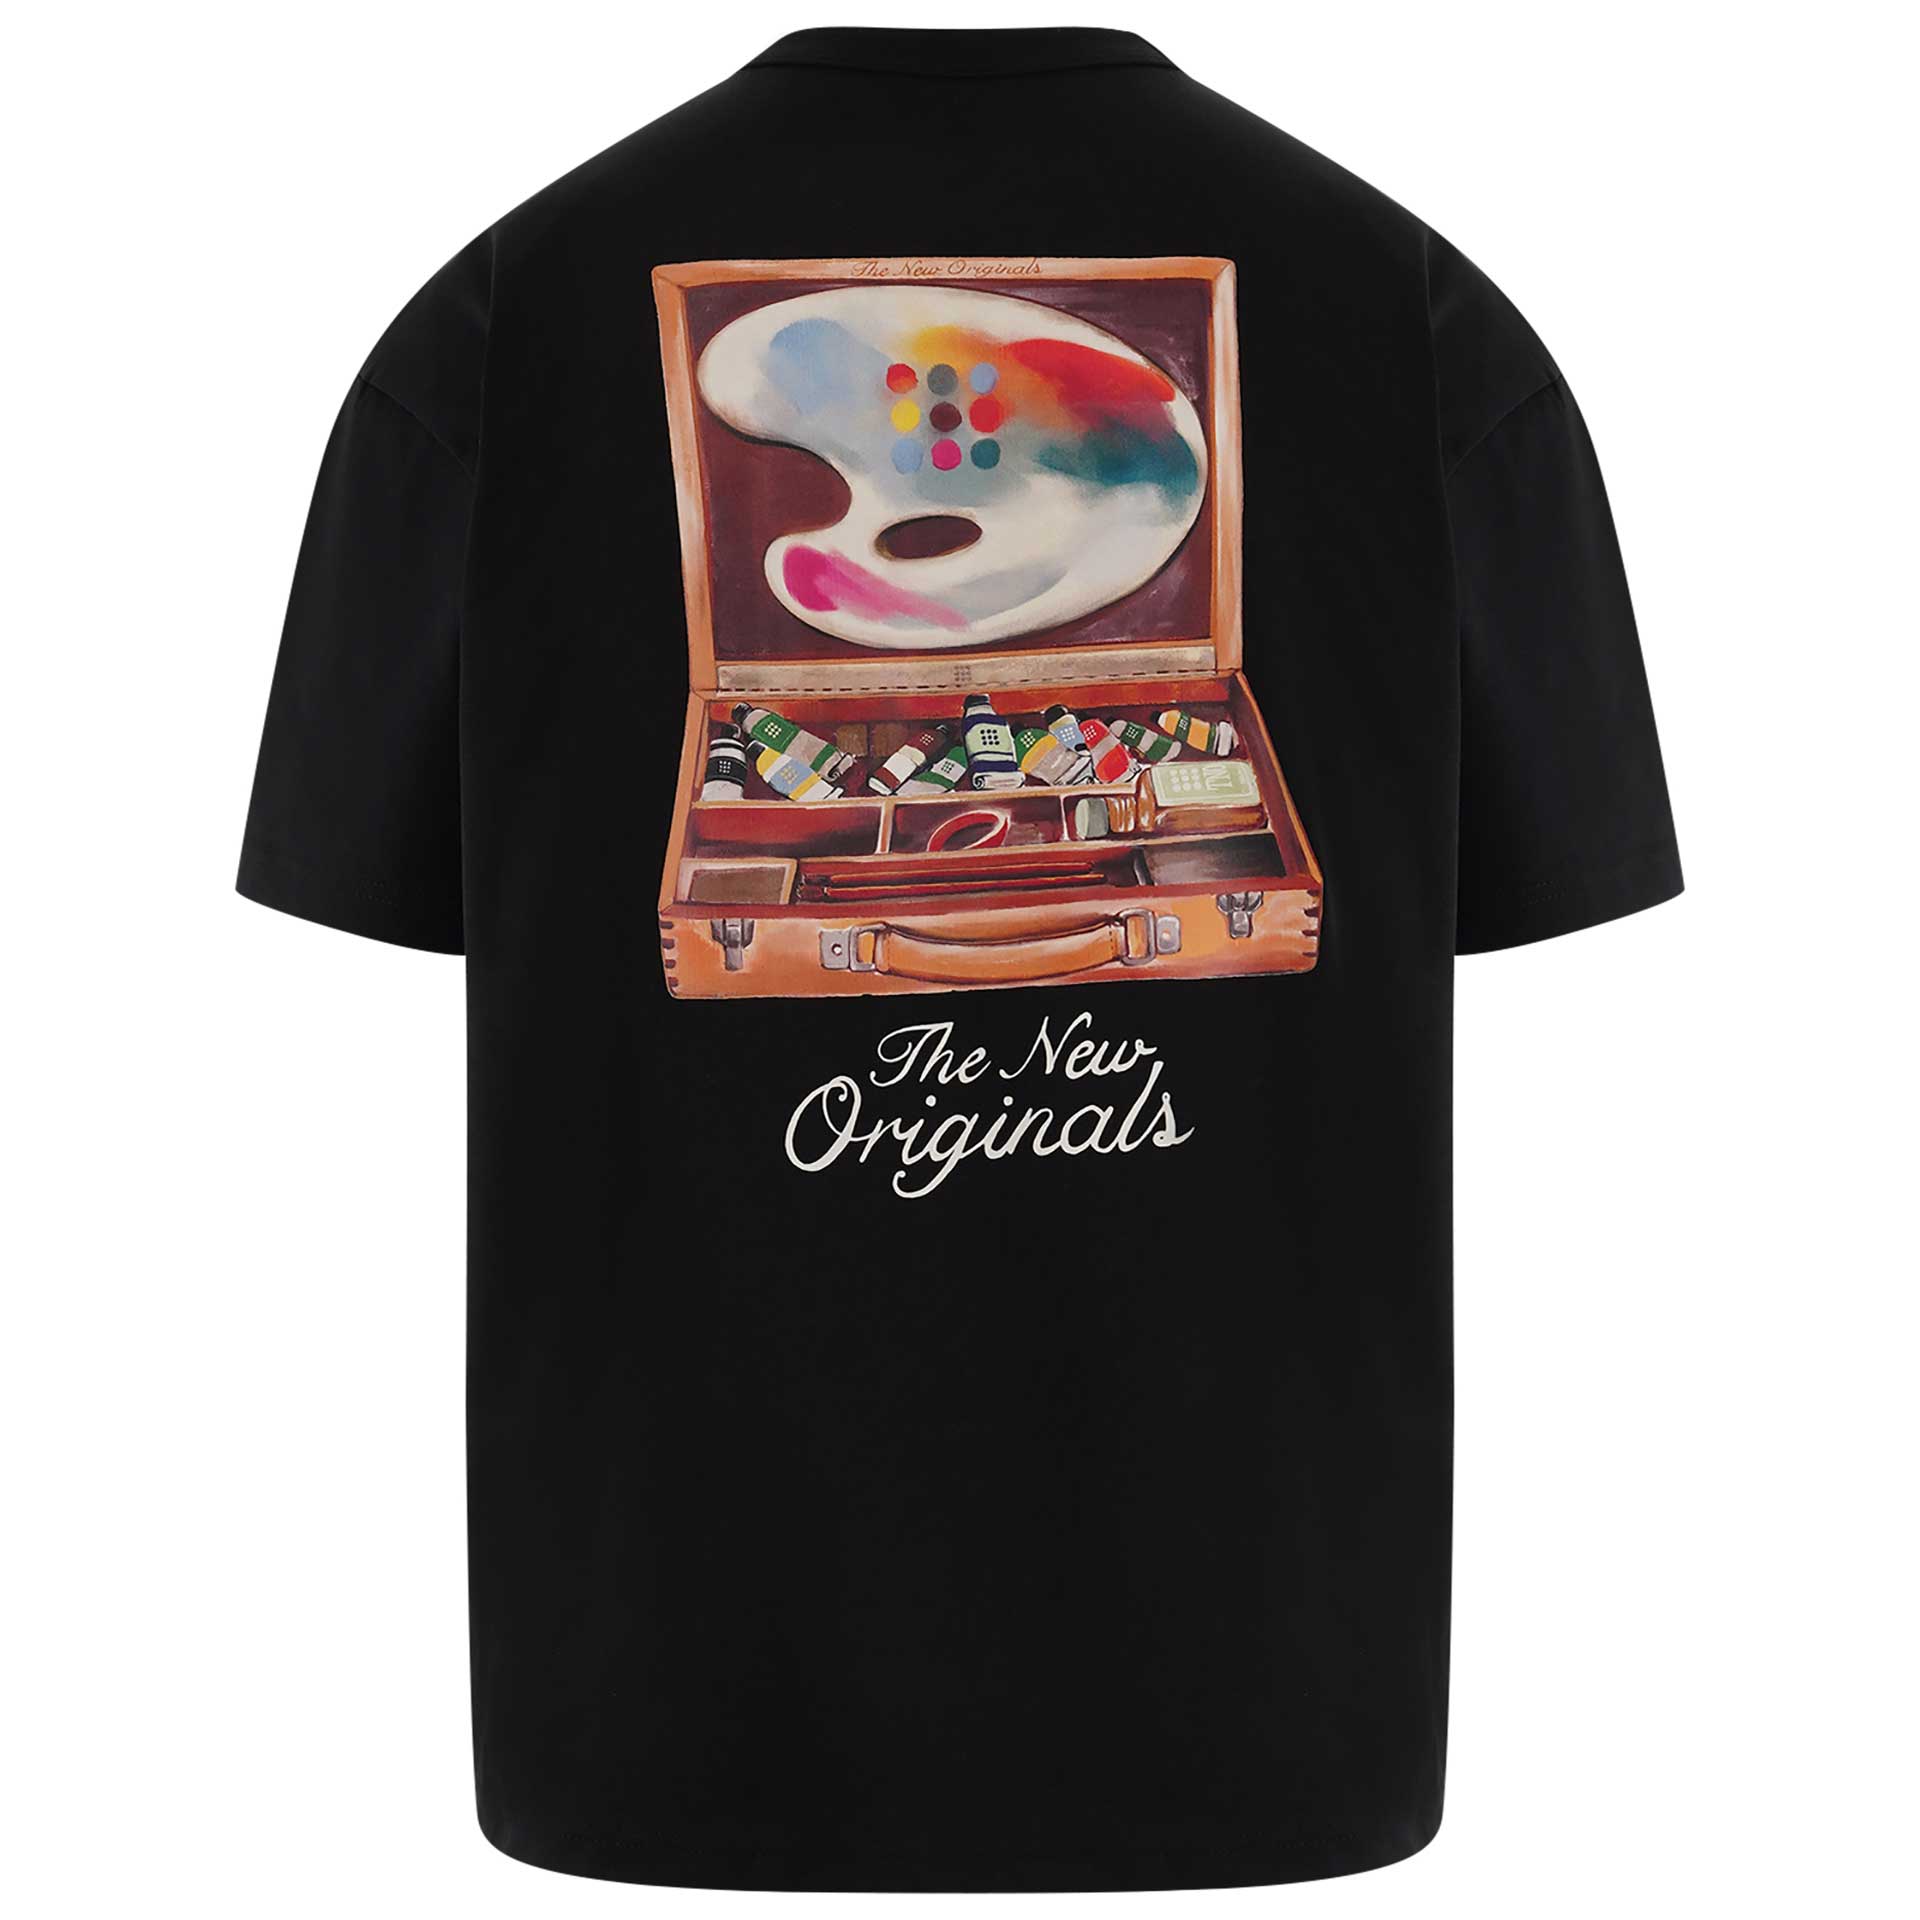 The New Originals Clothing T-shirt Paint Box Tee 2